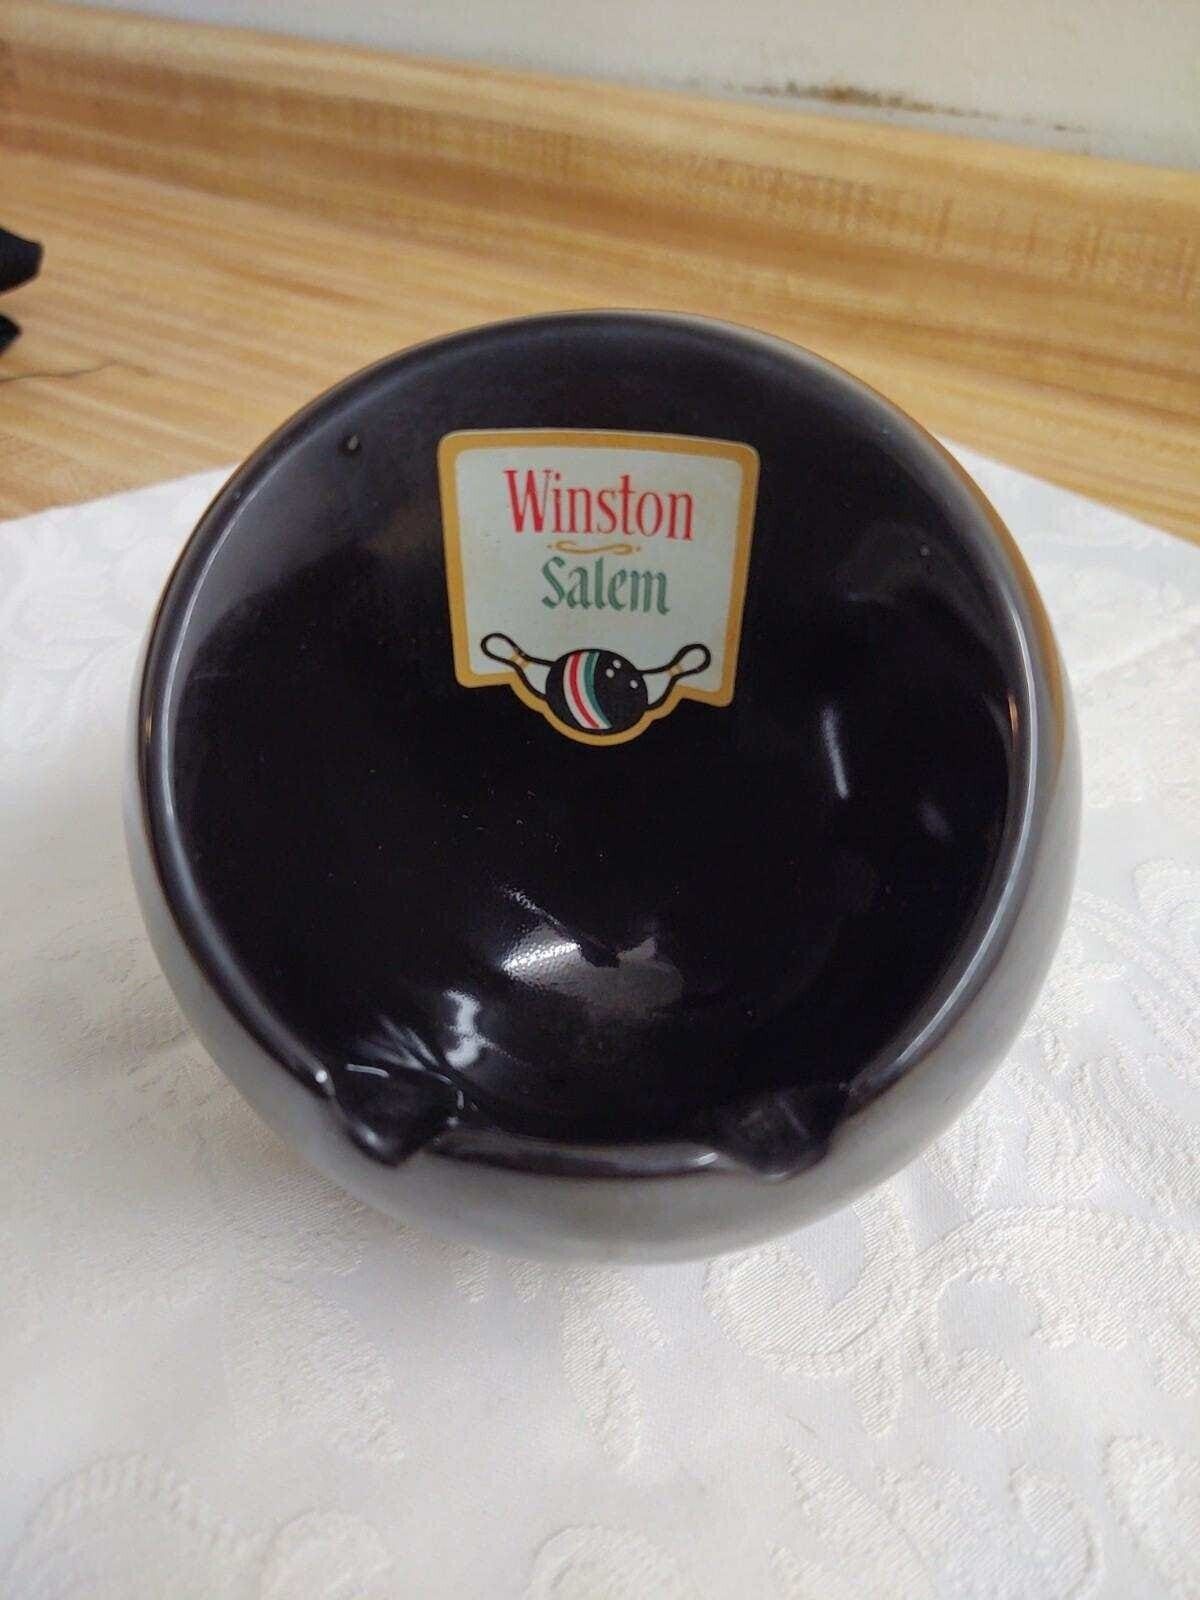 Vtg. ceramic bowling ball ashtray with Winston/Salem advertising.